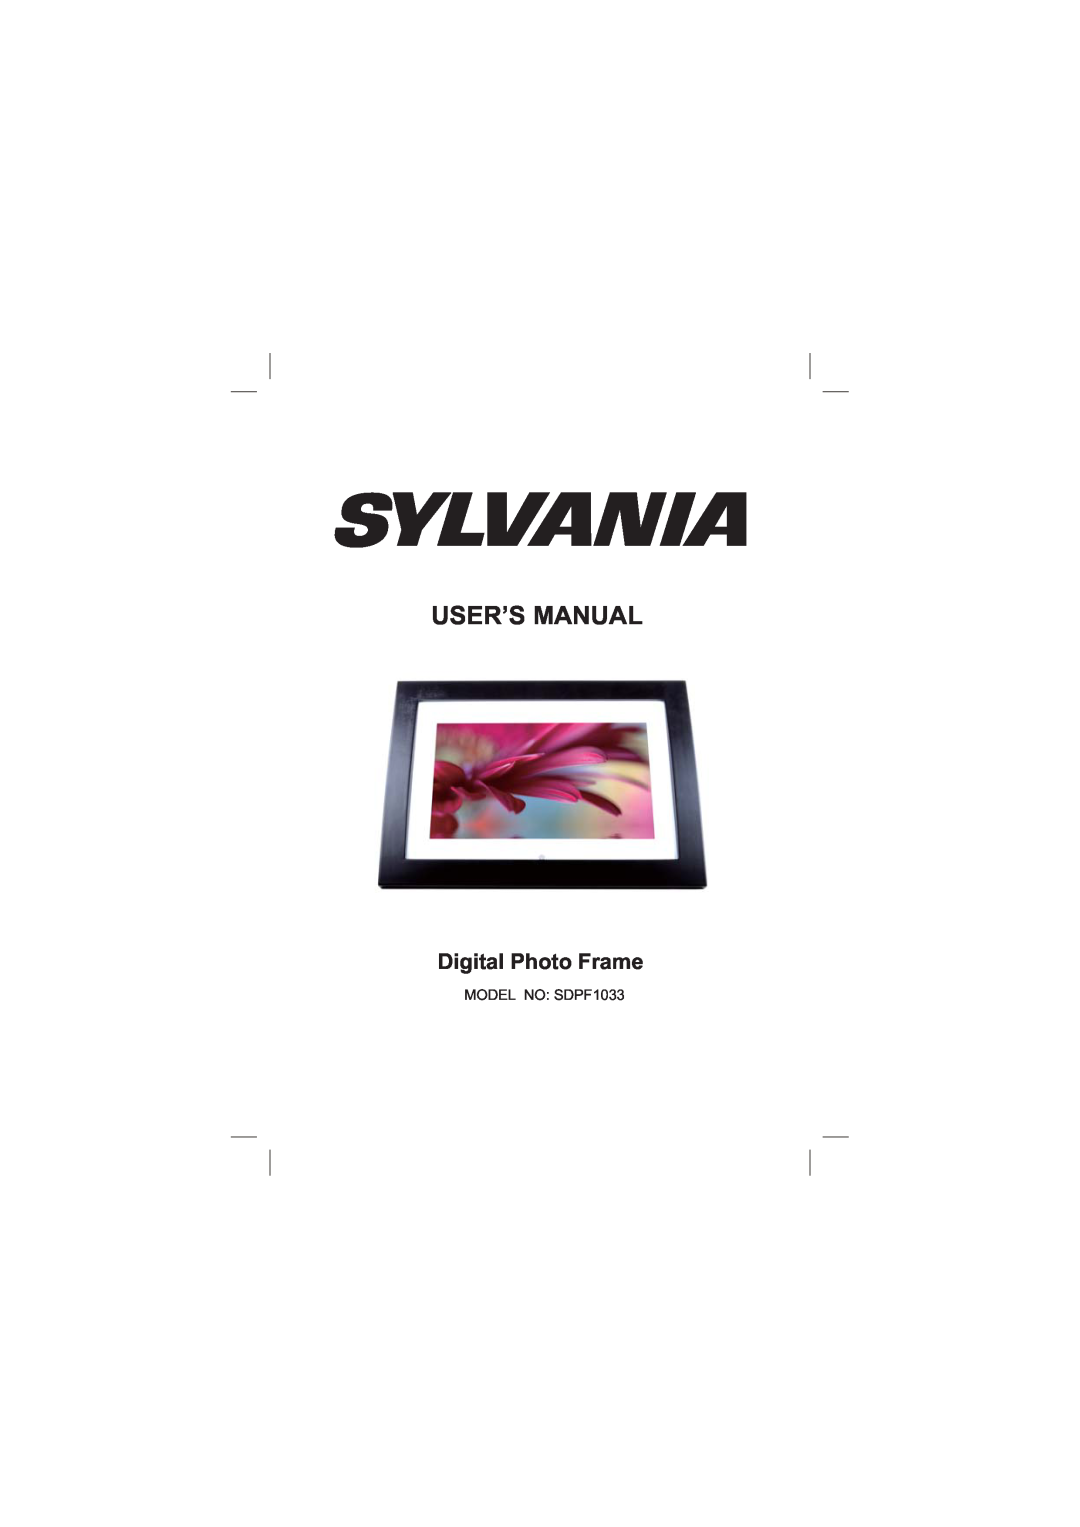 Sylvania SDPF1033 user manual User’S Manual, Digital Photo Frame 